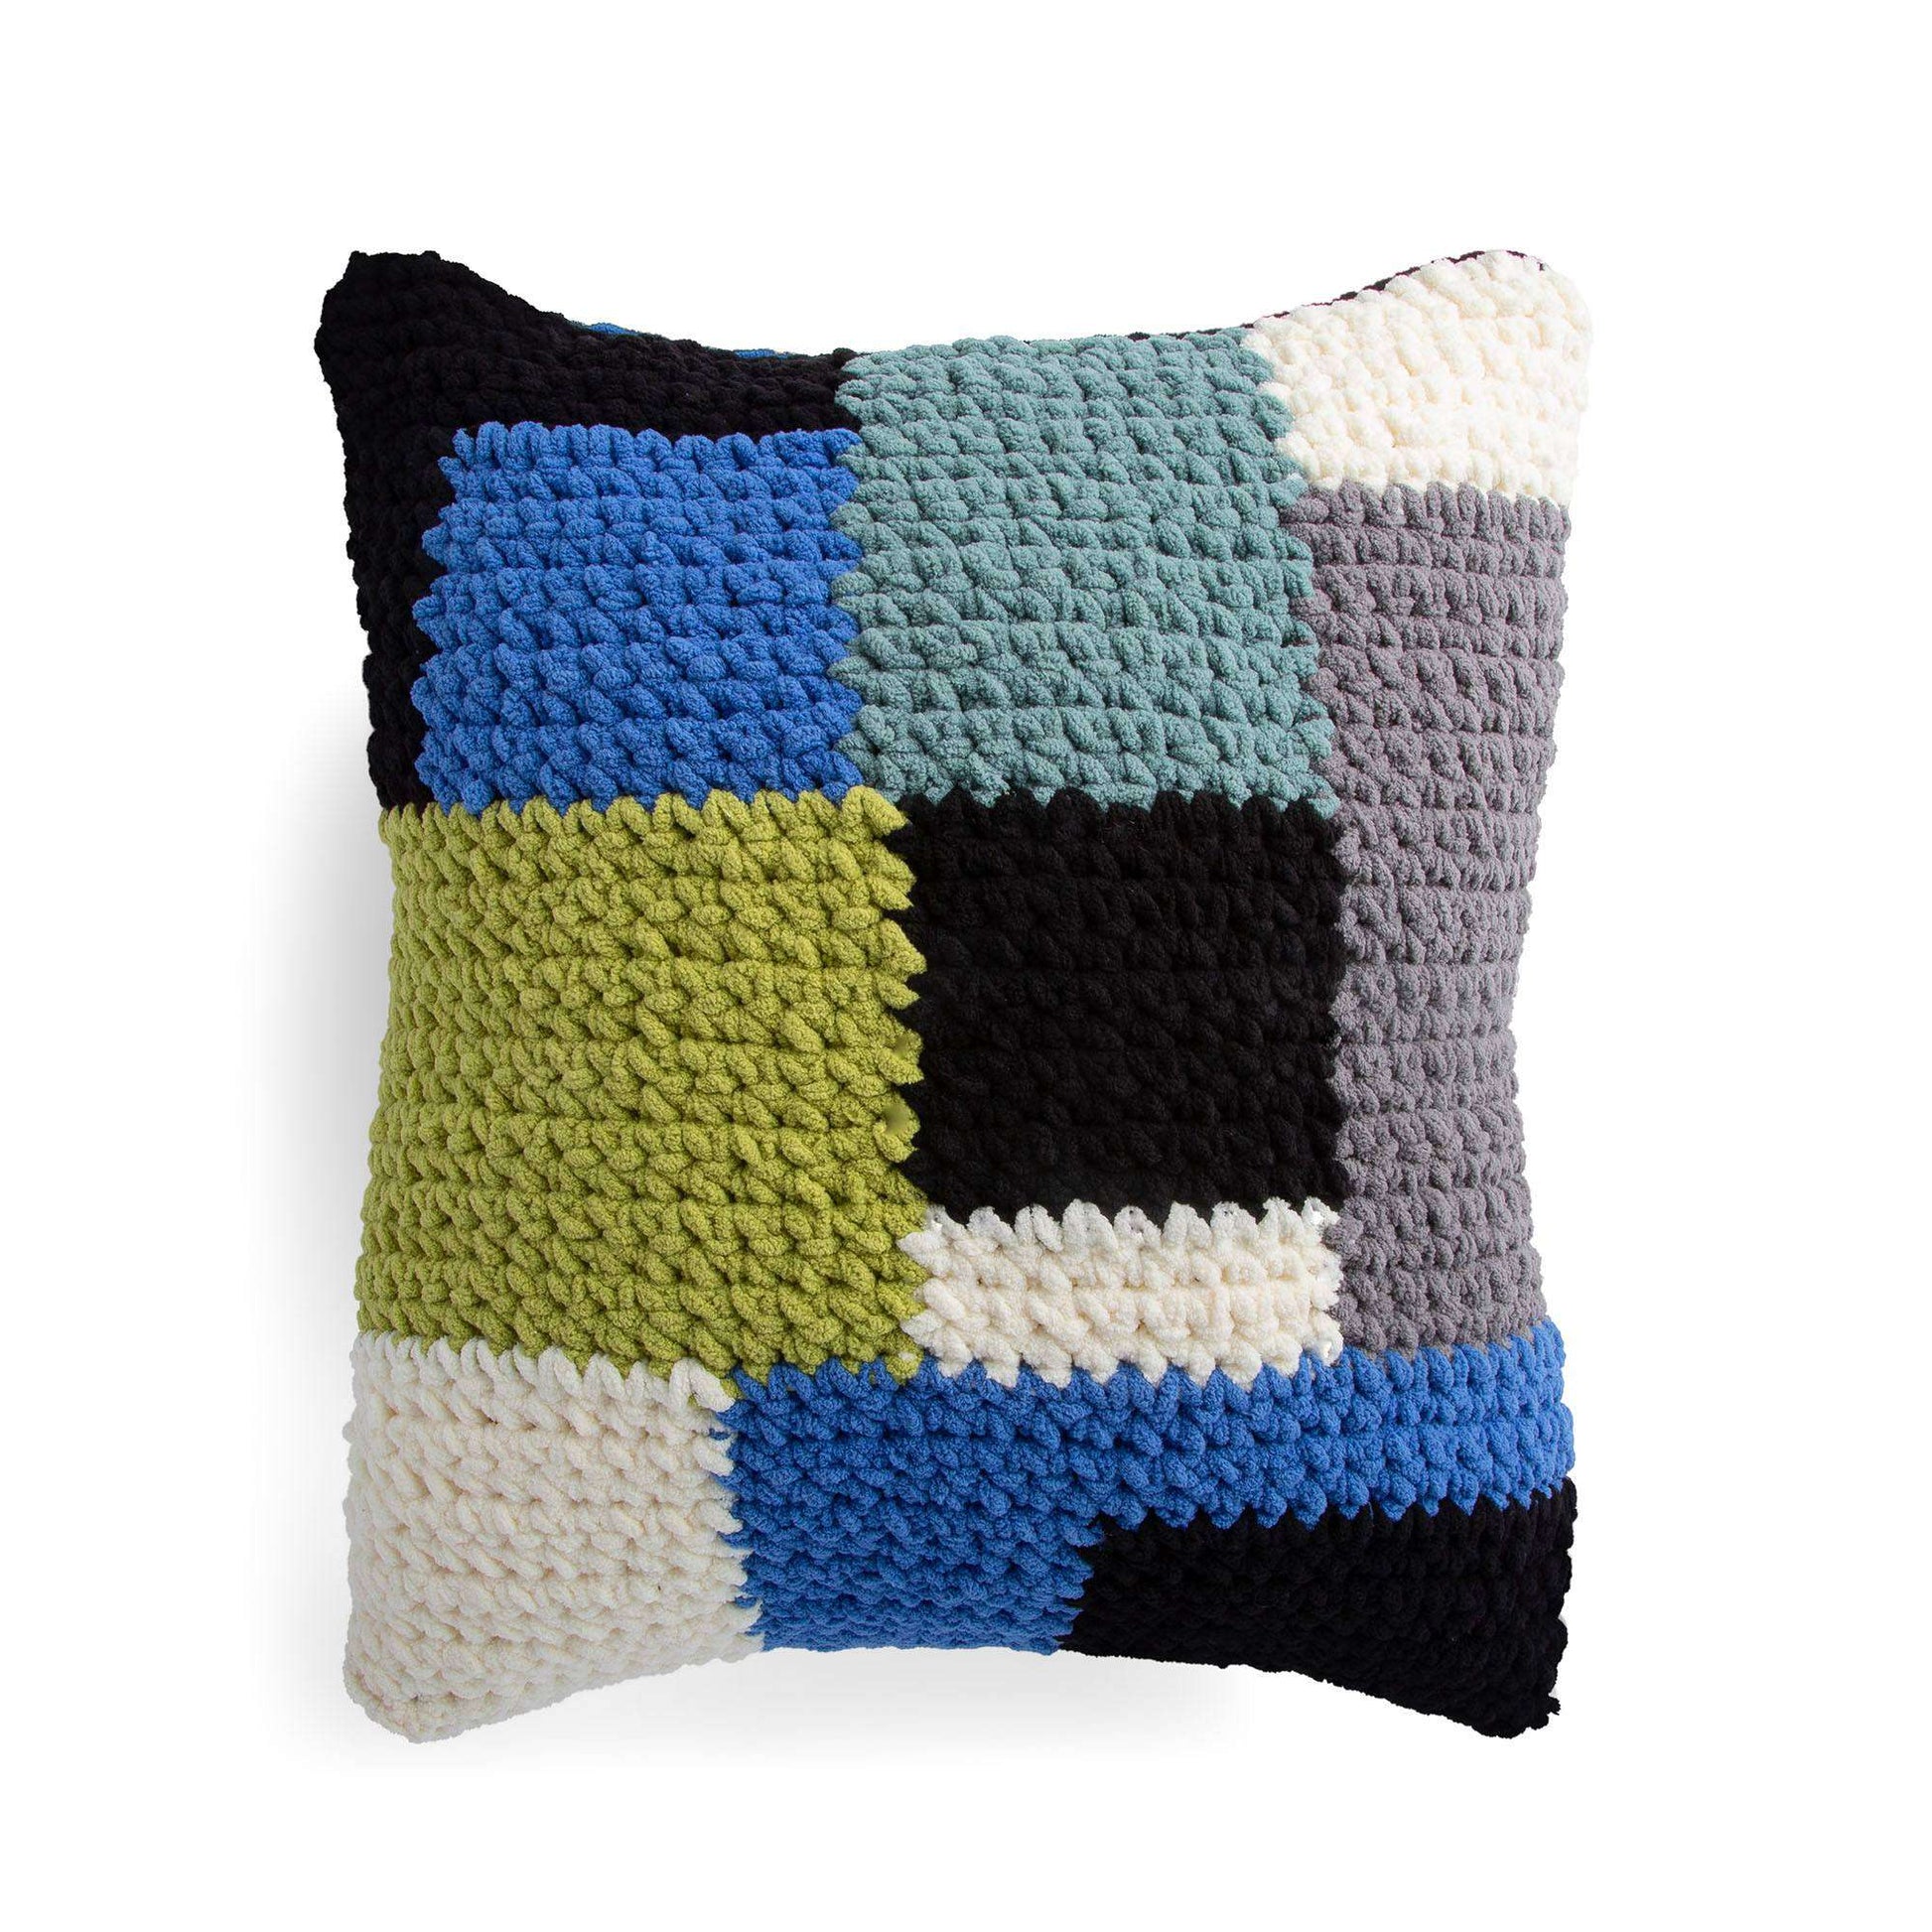 Free Bernat Blocked Out Crochet Pillow Pattern